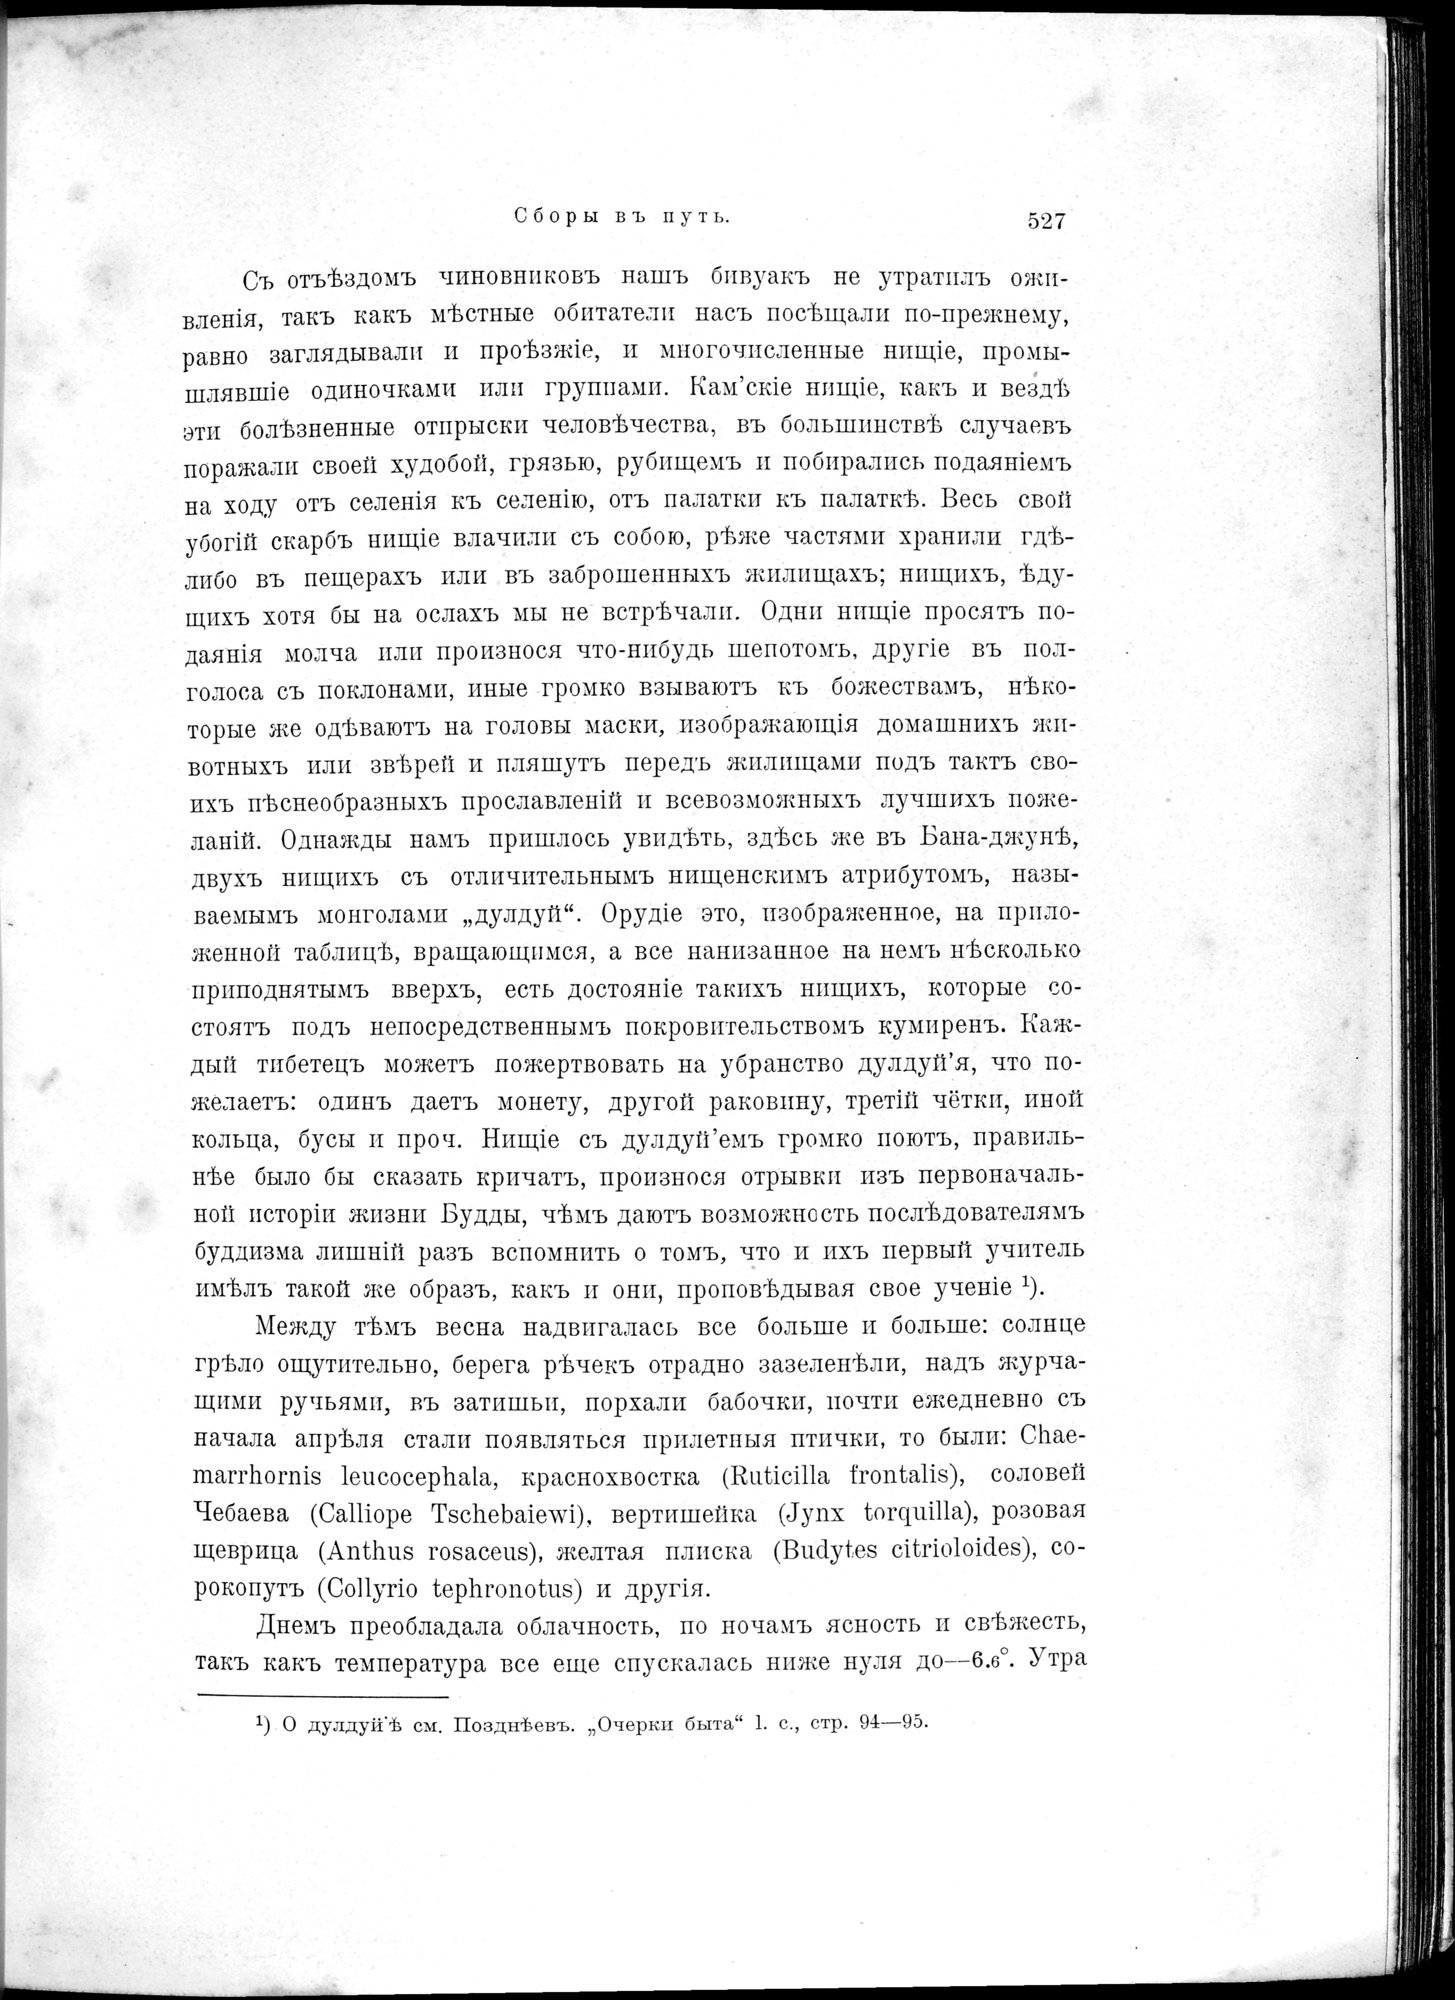 Mongoliia i Kam : vol.2 / Page 345 (Grayscale High Resolution Image)